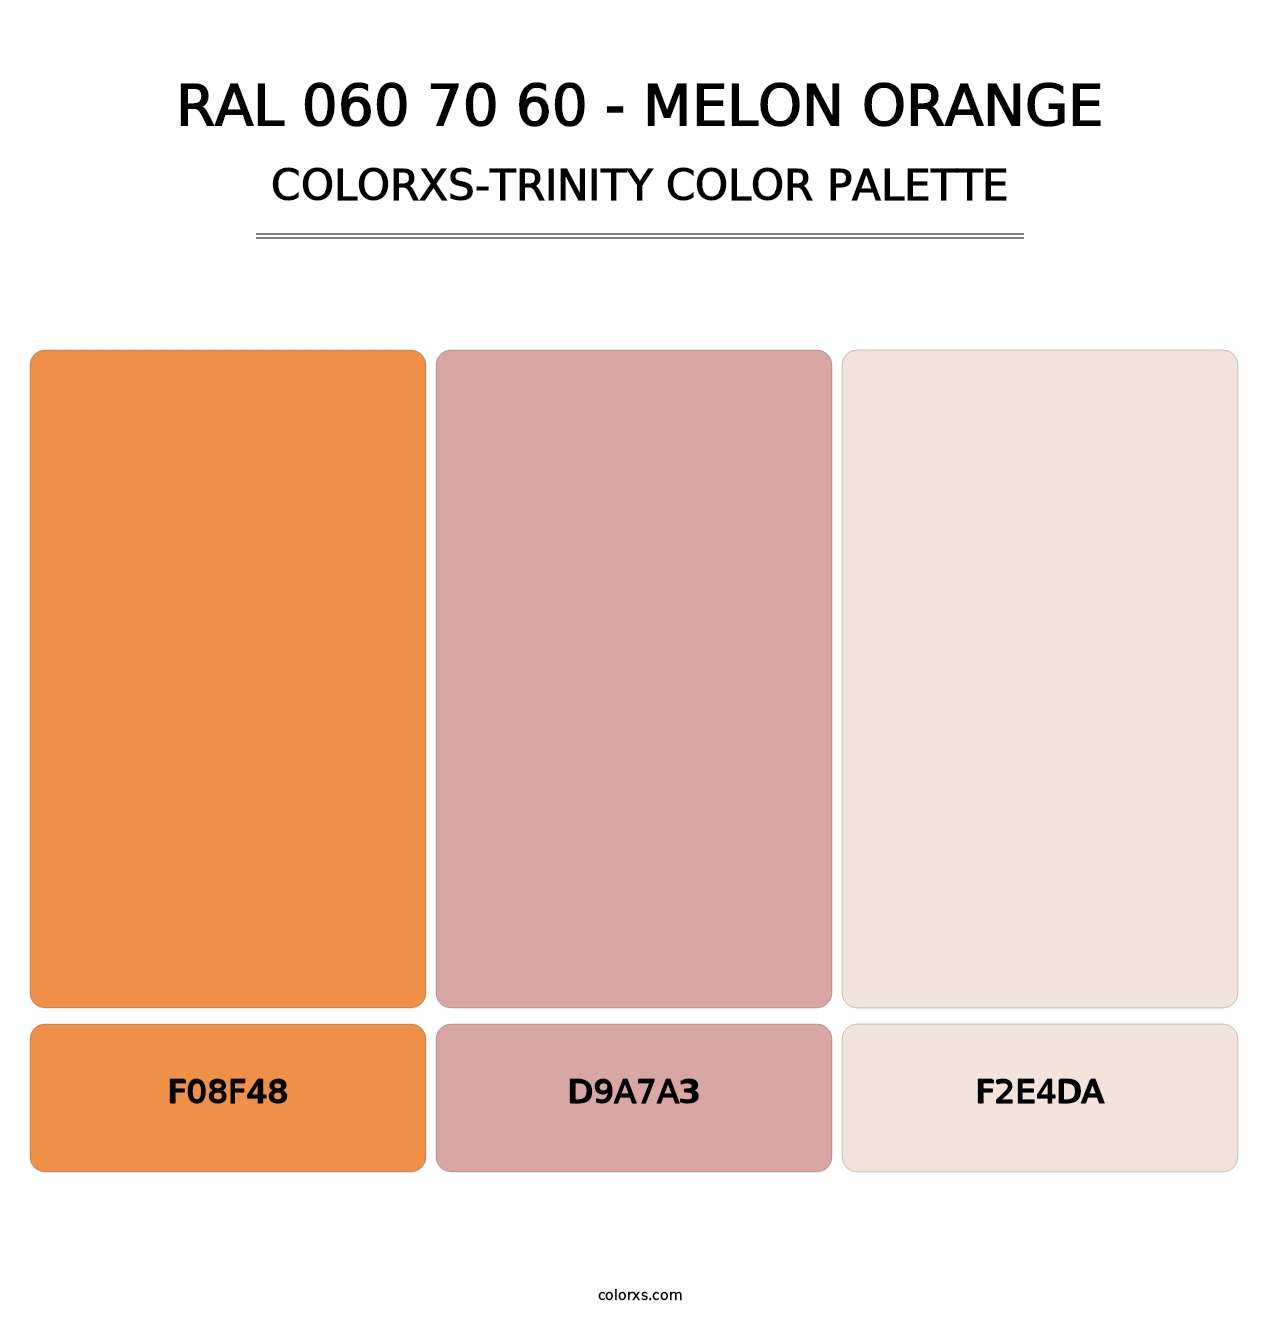 RAL 060 70 60 - Melon Orange - Colorxs Trinity Palette